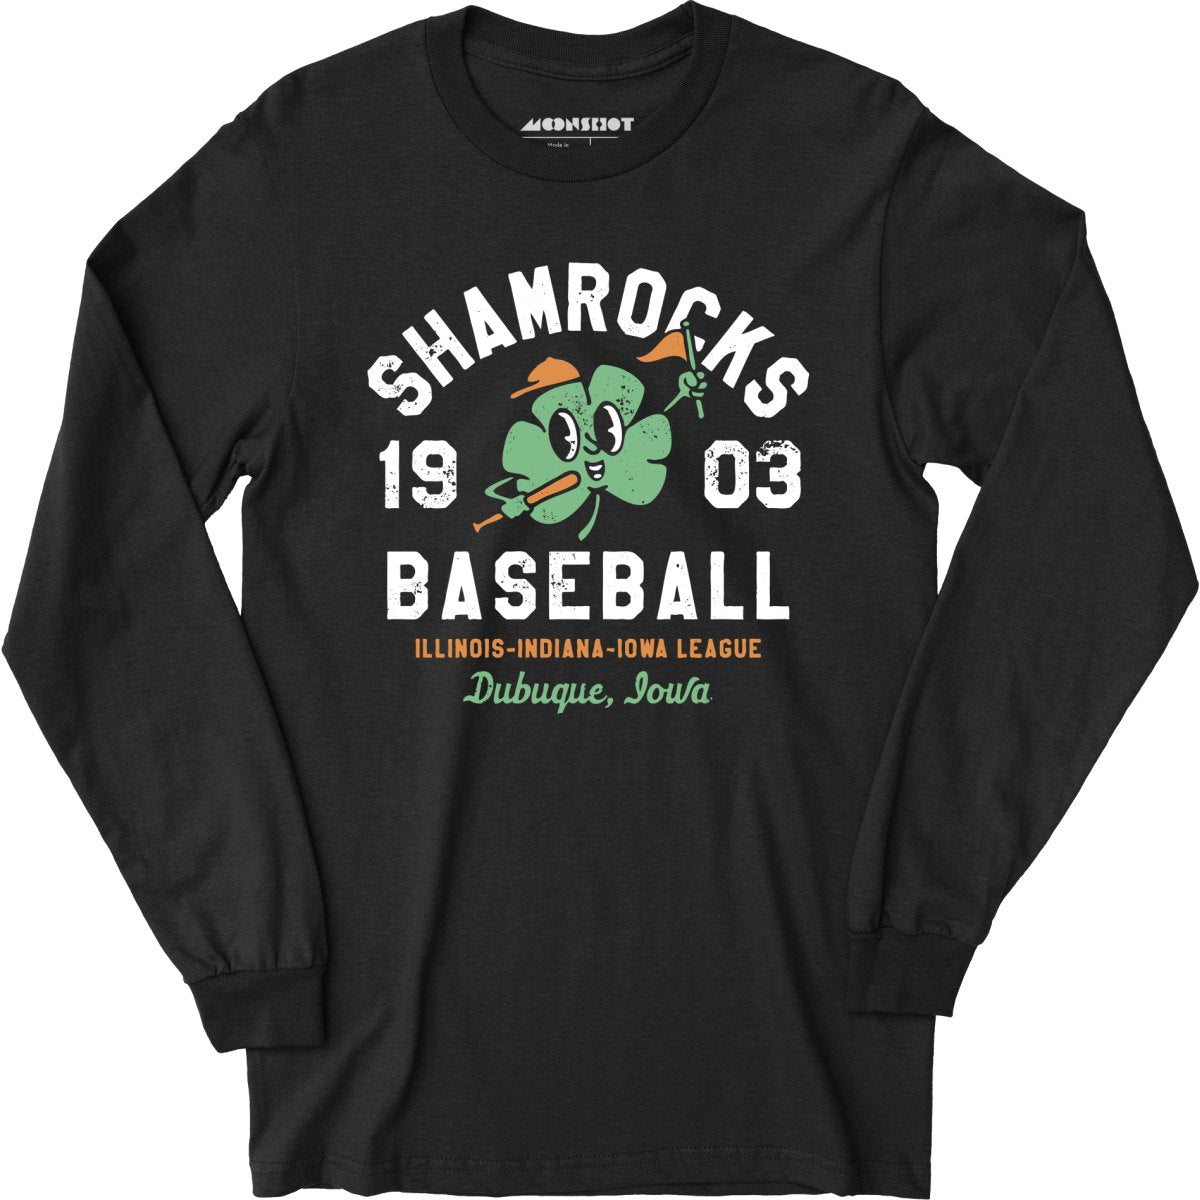 Dubuque Shamrocks - Iowa - Vintage Defunct Baseball Teams - Long Sleeve T-Shirt